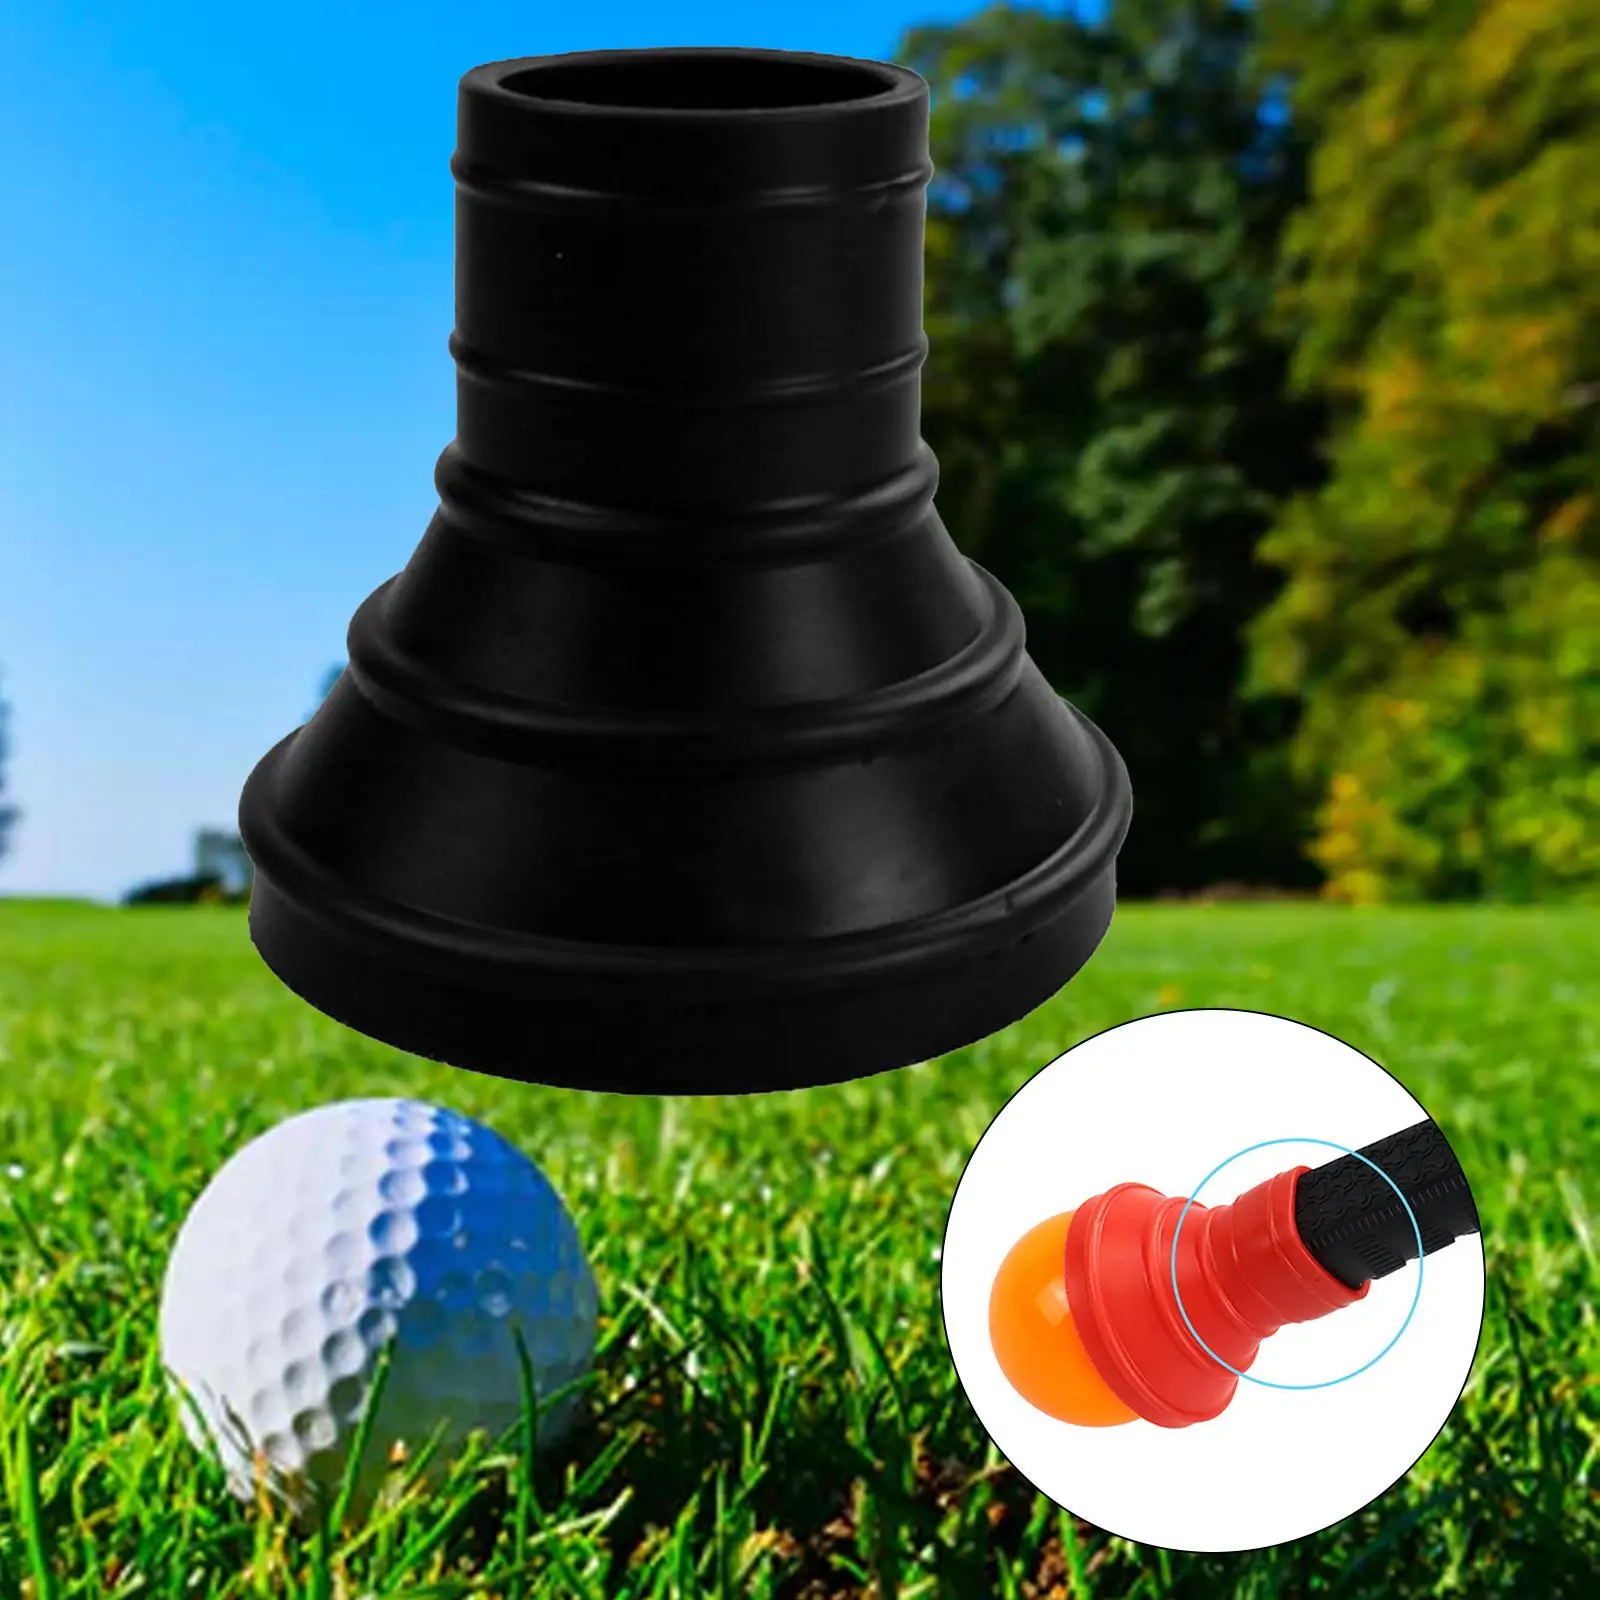 Park Golf Ball Pick up Durable Professional Rubber Grabber Saver Retriever  for Putter Grip Park Golf Accessory Golfer